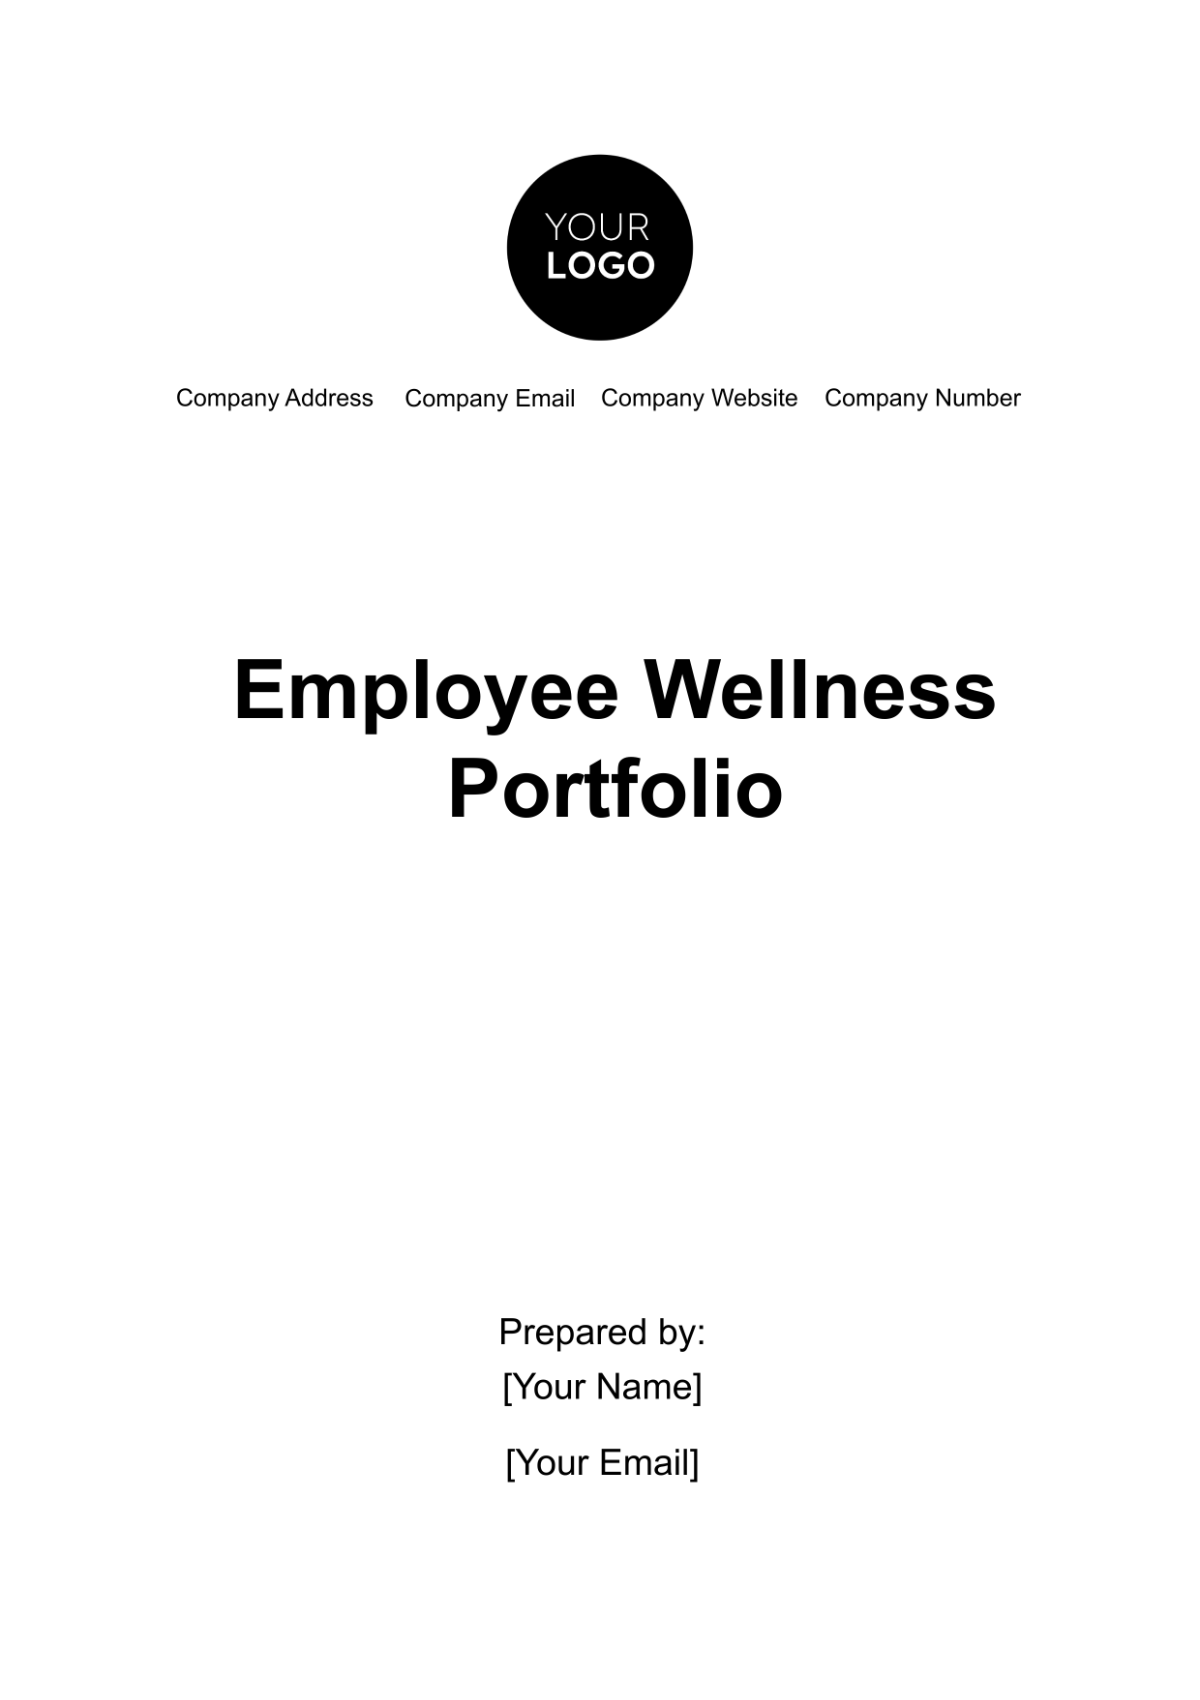 Employee Wellness Portfolio Template